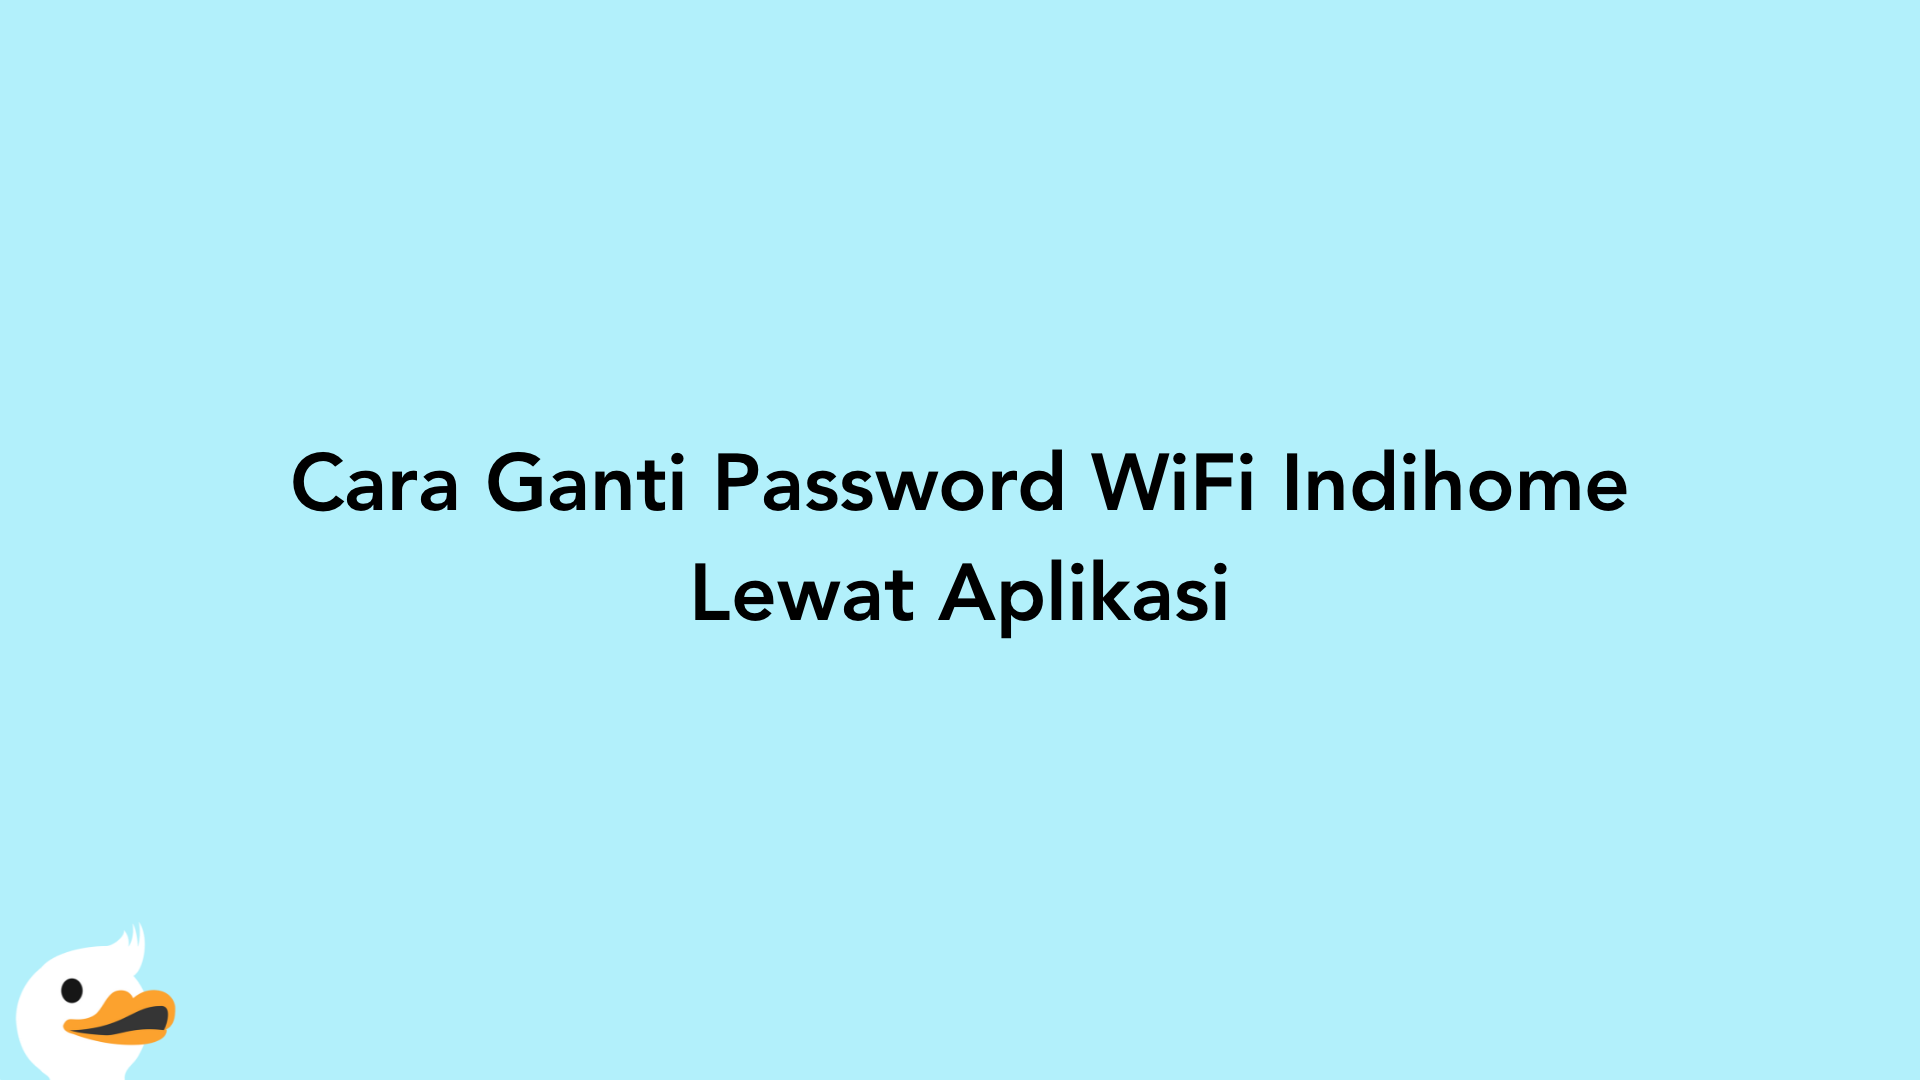 Cara Ganti Password WiFi Indihome Lewat Aplikasi